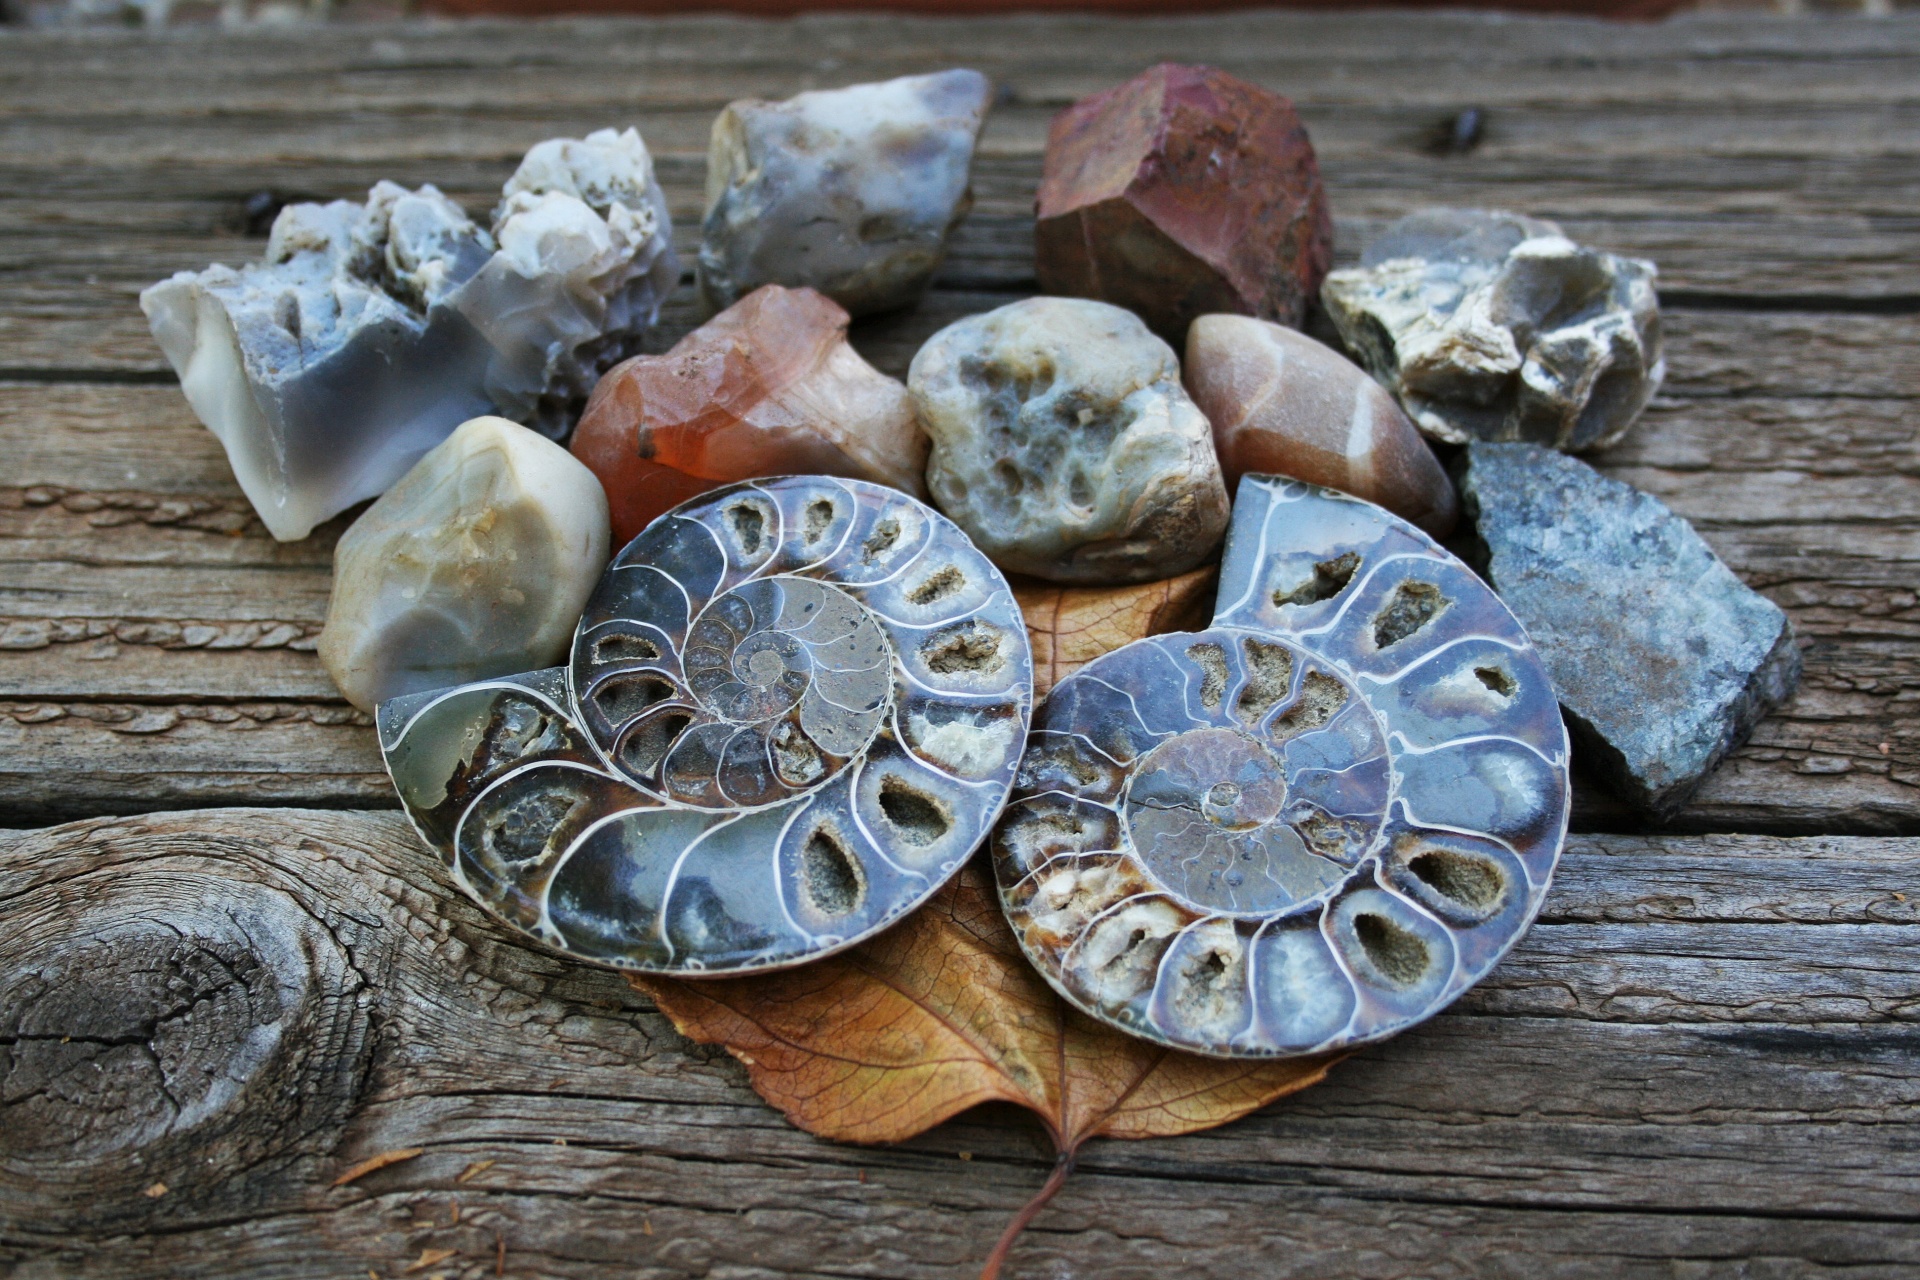 Halves Of An Ammonite